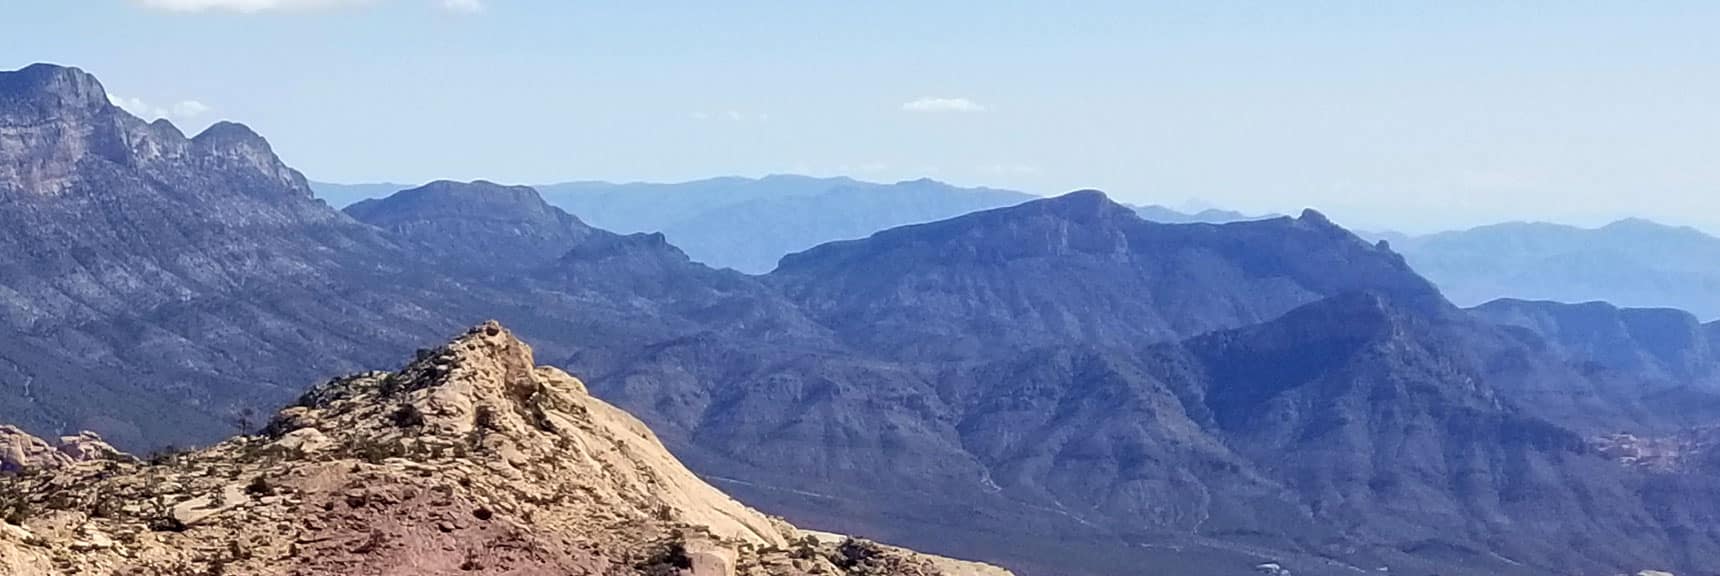 Damsel Peak Viewed from Goat Rock (North Peak) Summit, Red Rock Park, Nevada